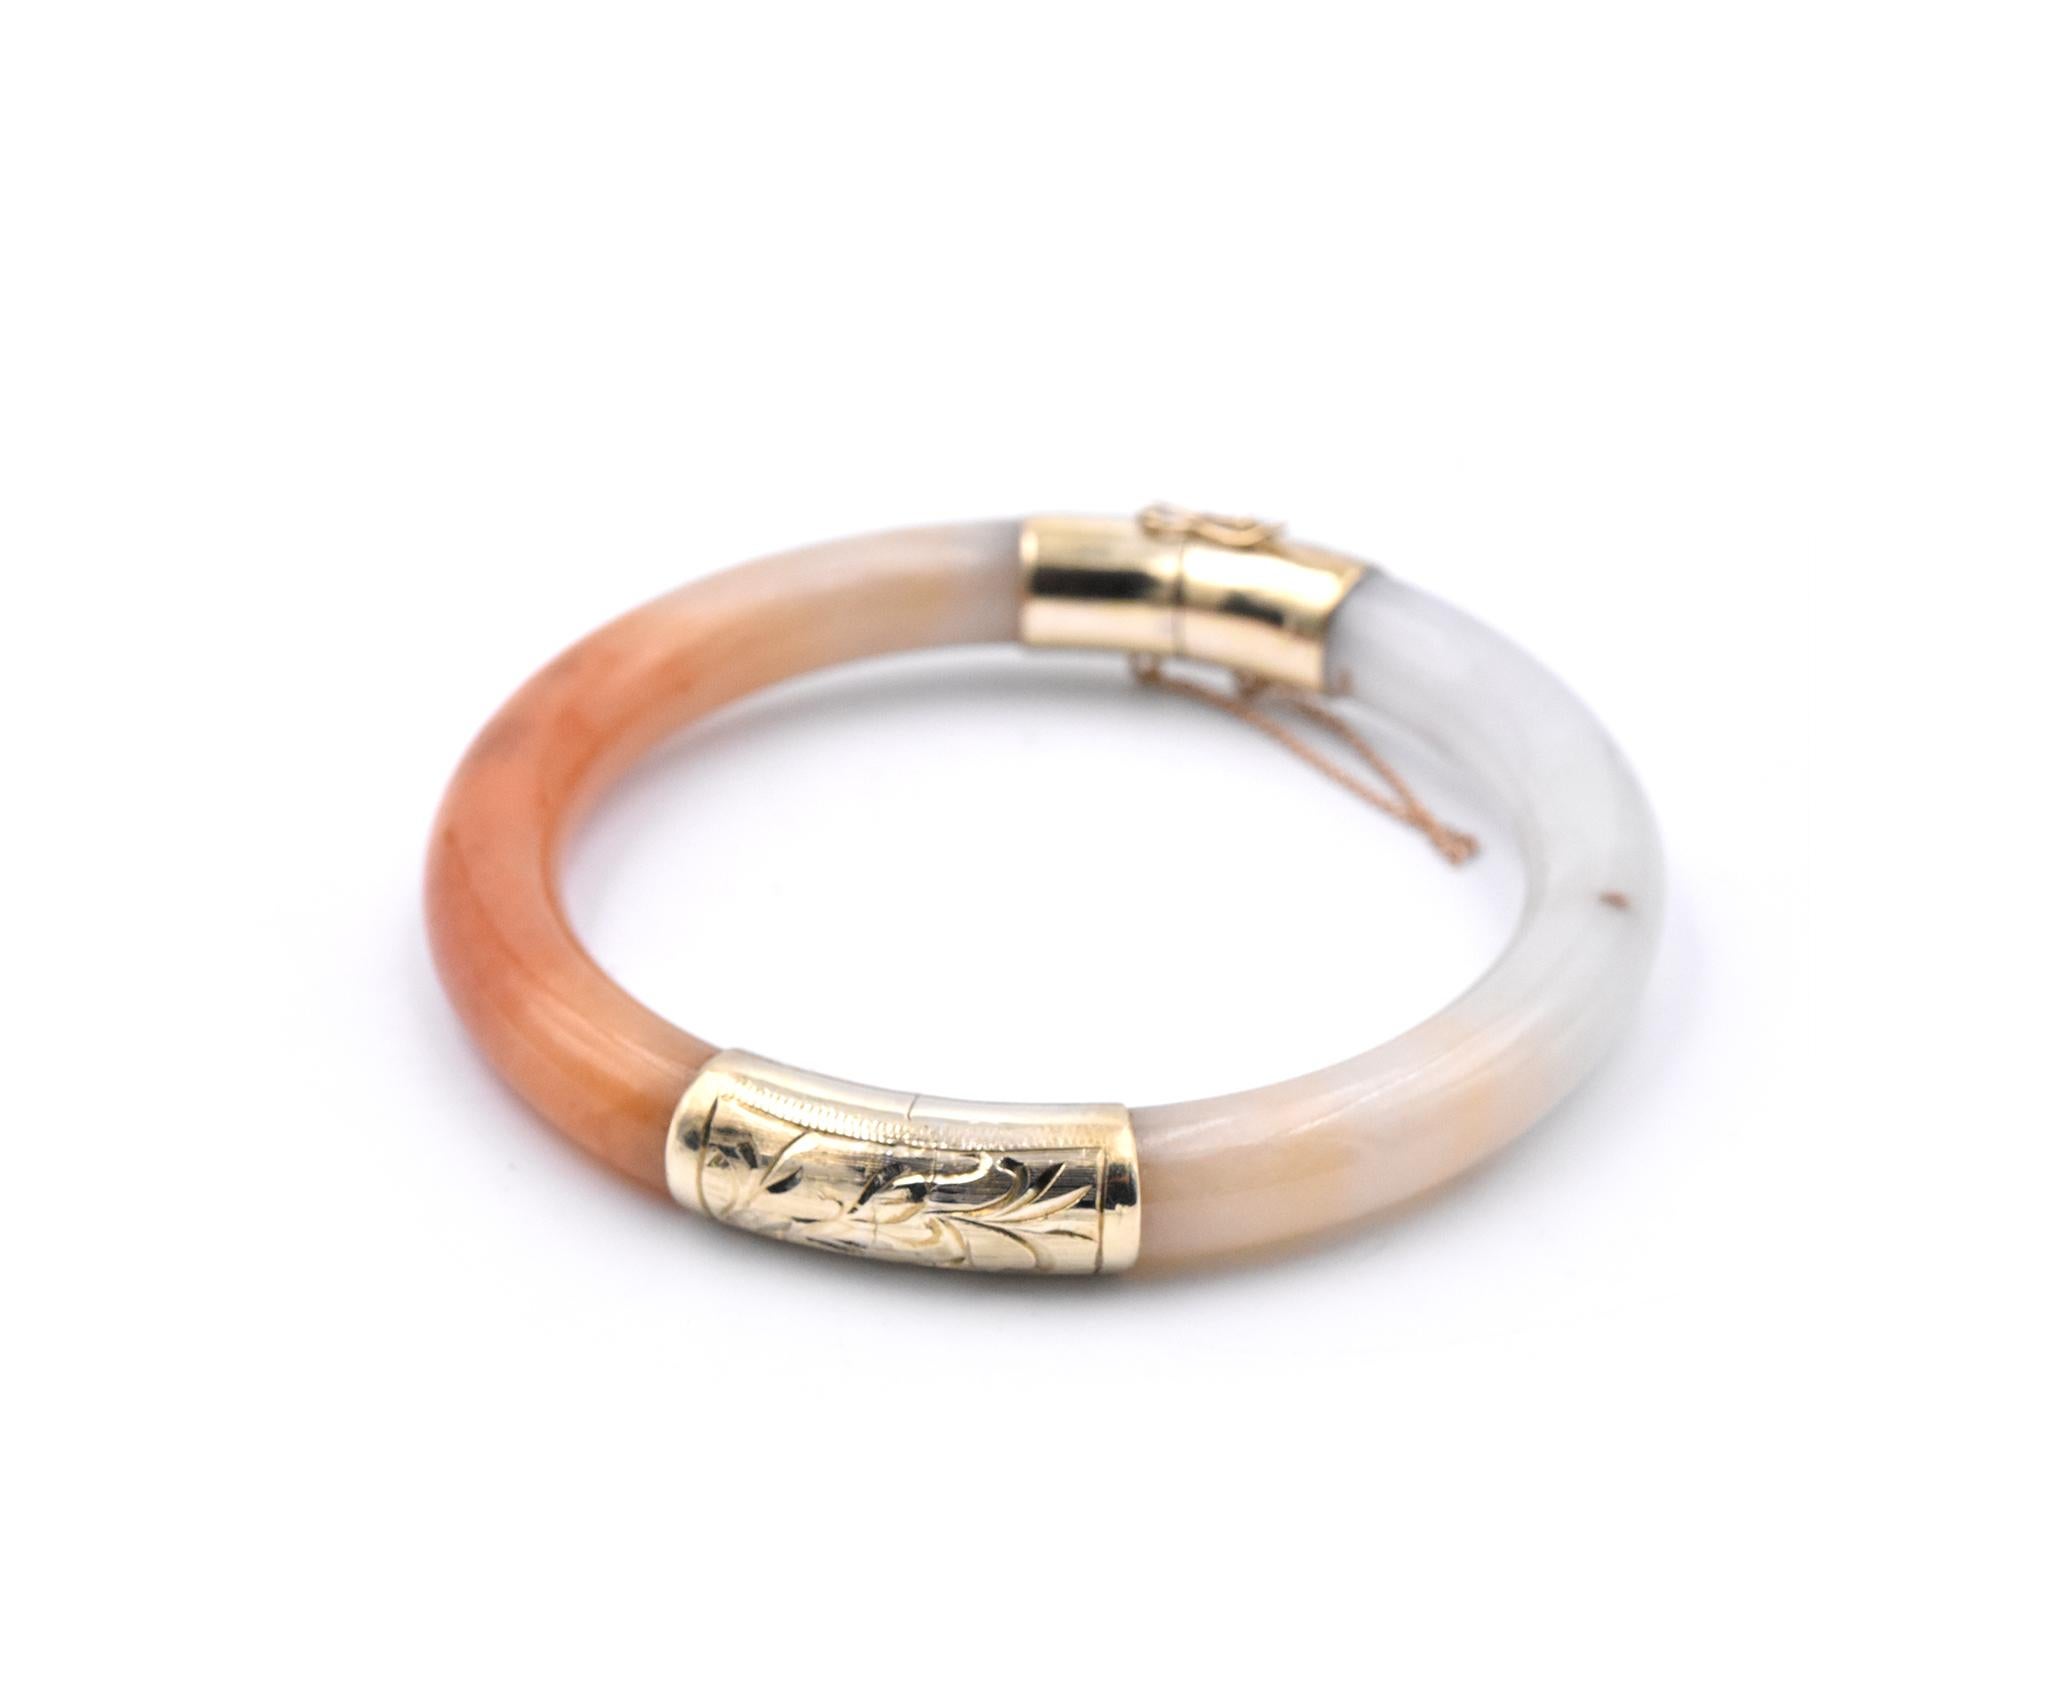 Designer: custom
Material: 14k yellow gold
Gemstone: Jade
Dimensions: bracelet will fit a 6.5-inch wrist 
Weight: 40.9 grams
